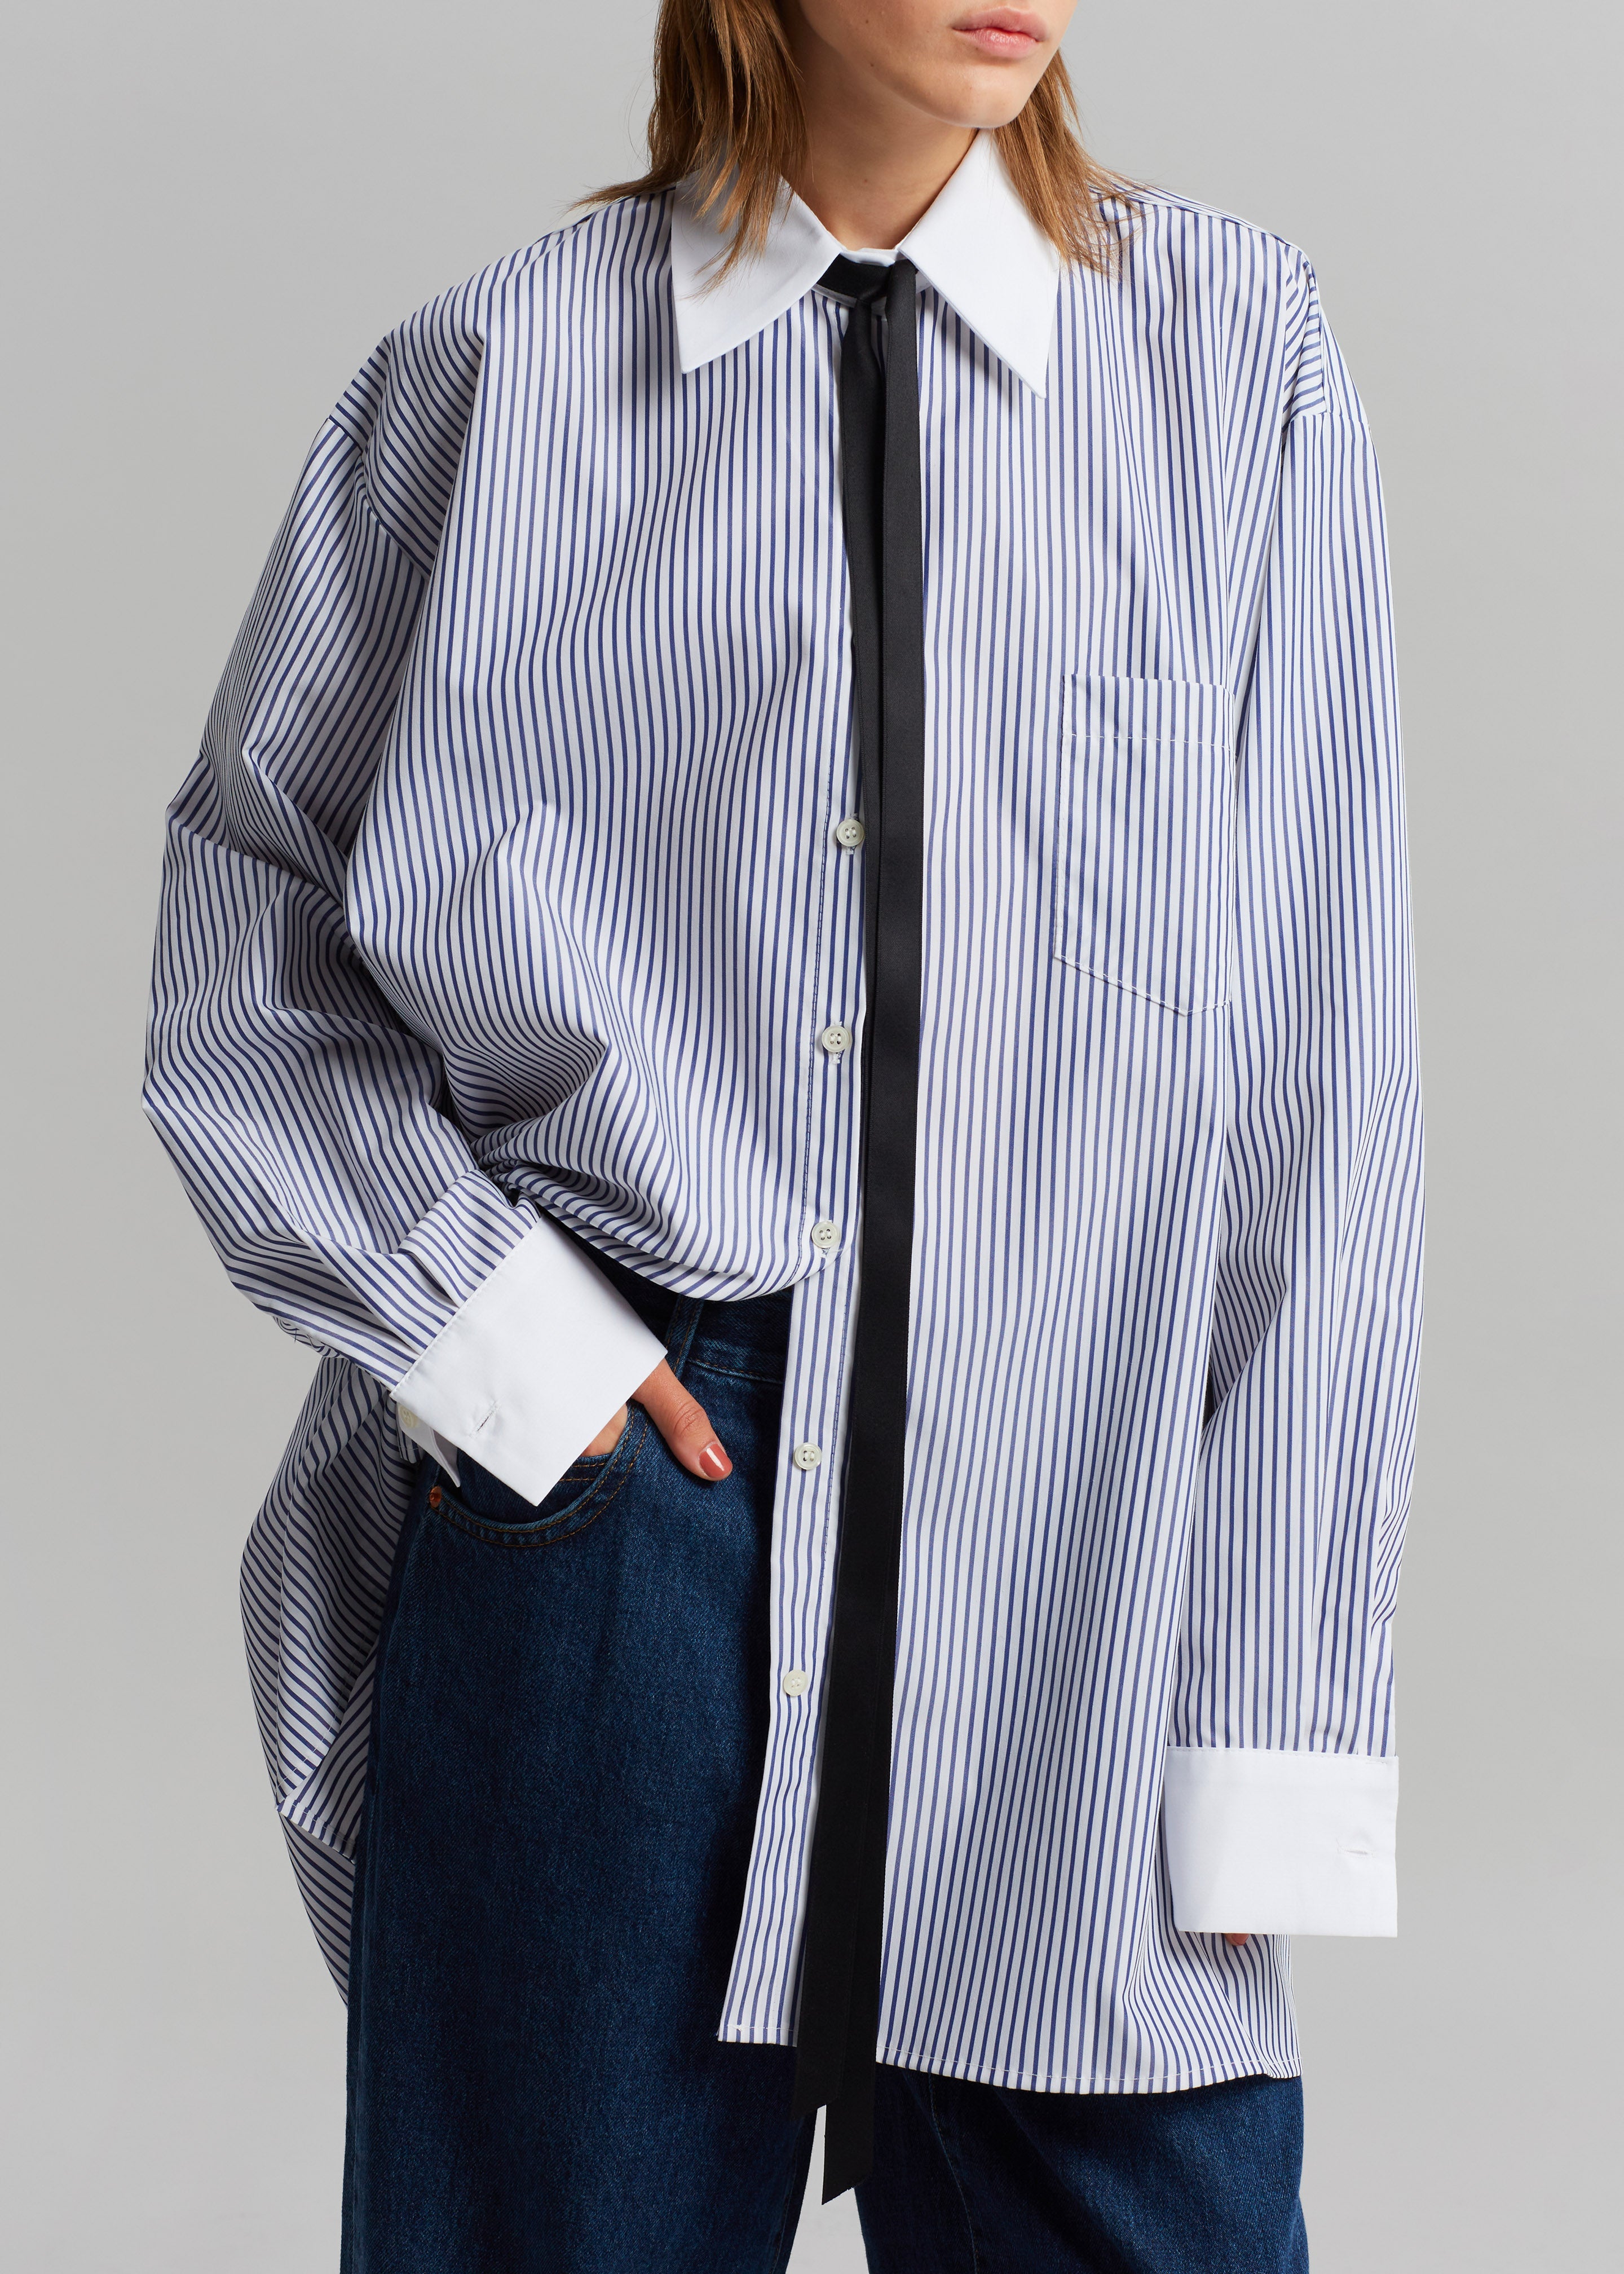 Jany Tie-Neck Shirt - Blue Stripe - 4